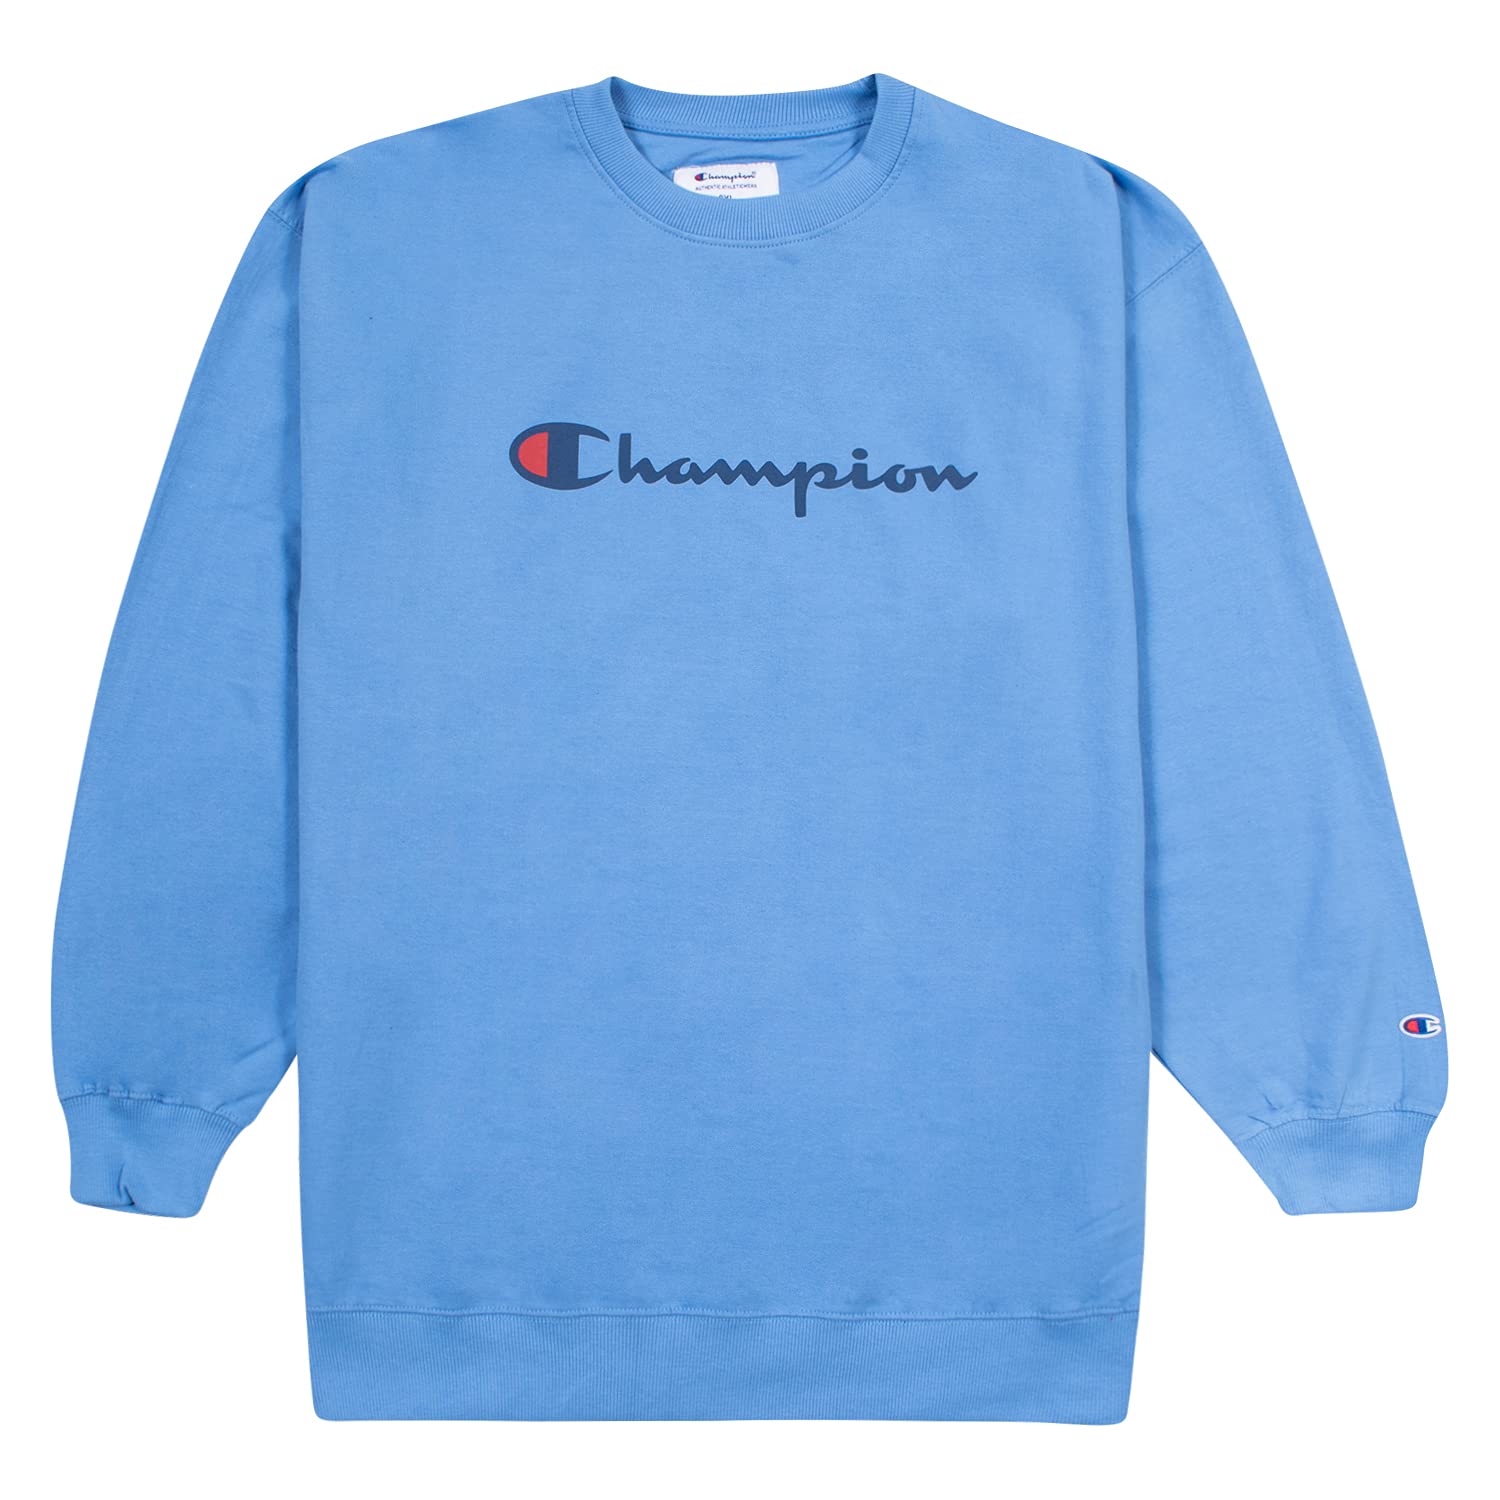 Champion Men's Sweatshirt - Blue - XL